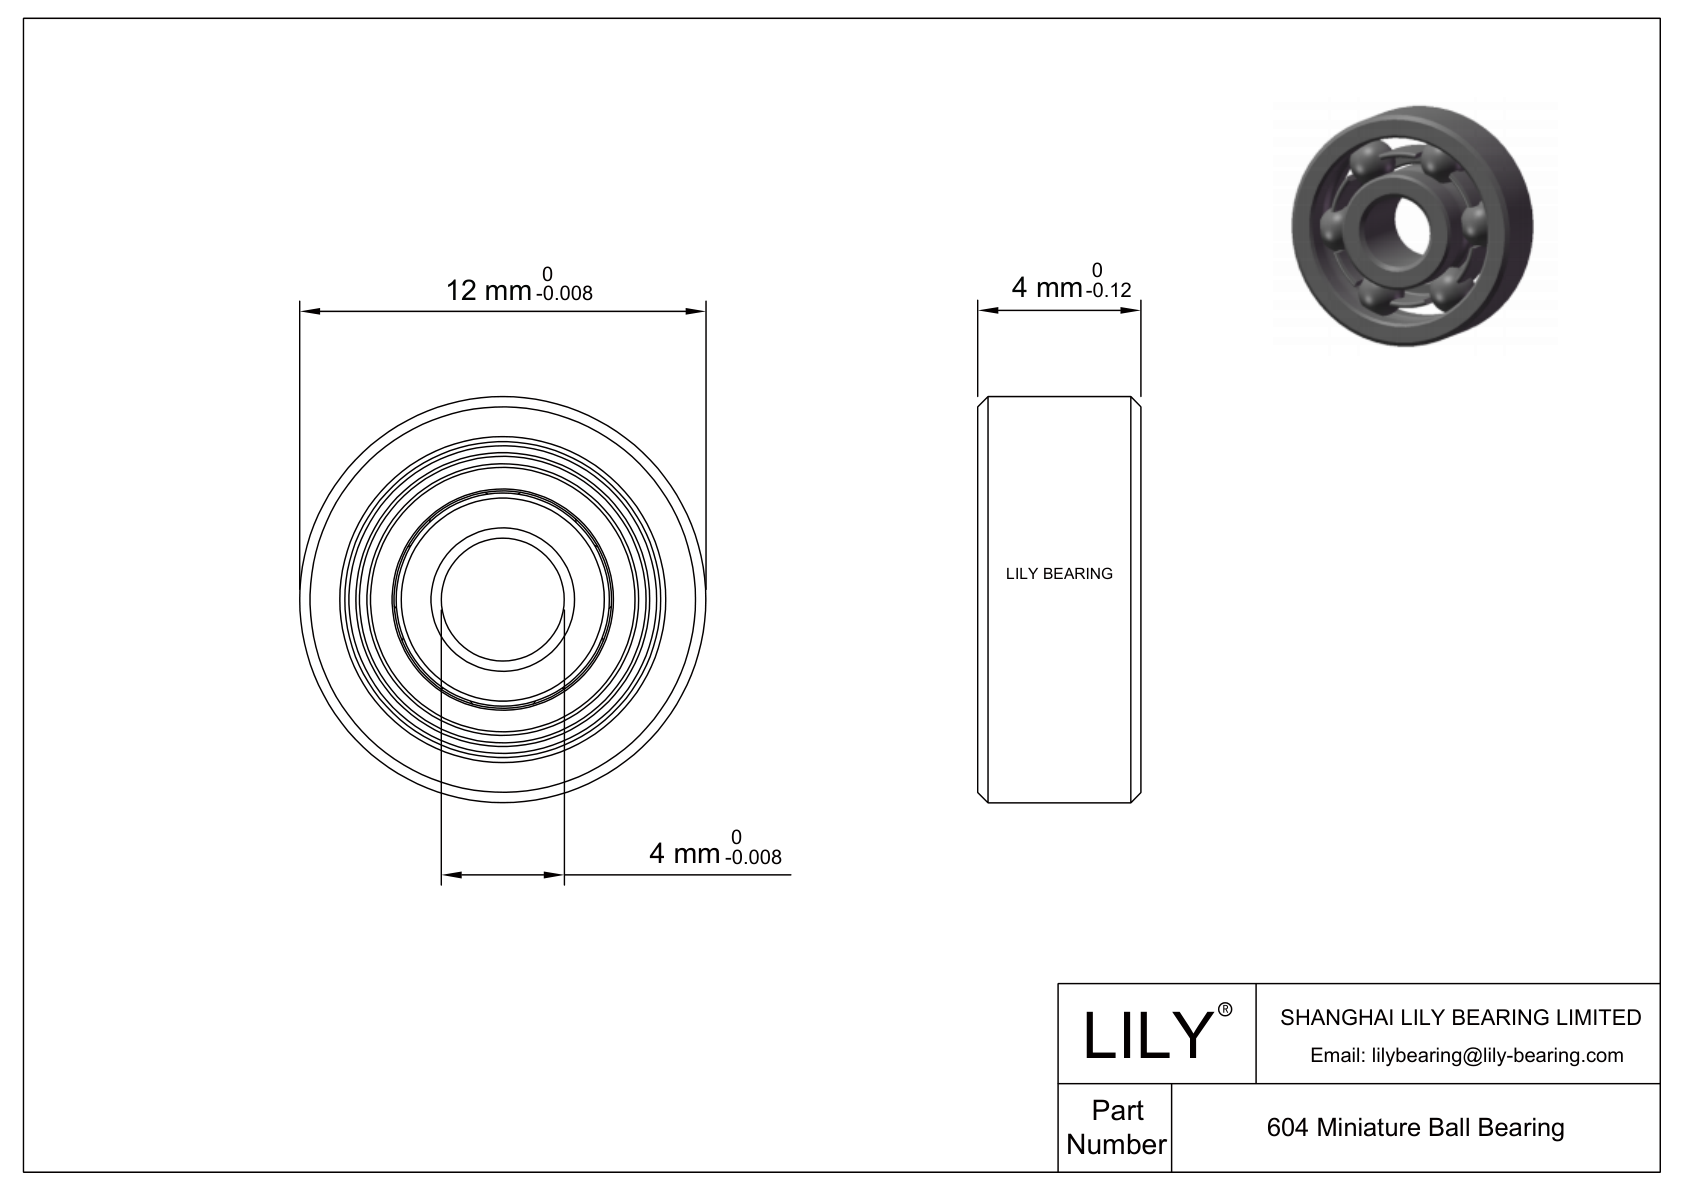 LILY-PU60416-5 Polyurethane Coated Bearing cad drawing